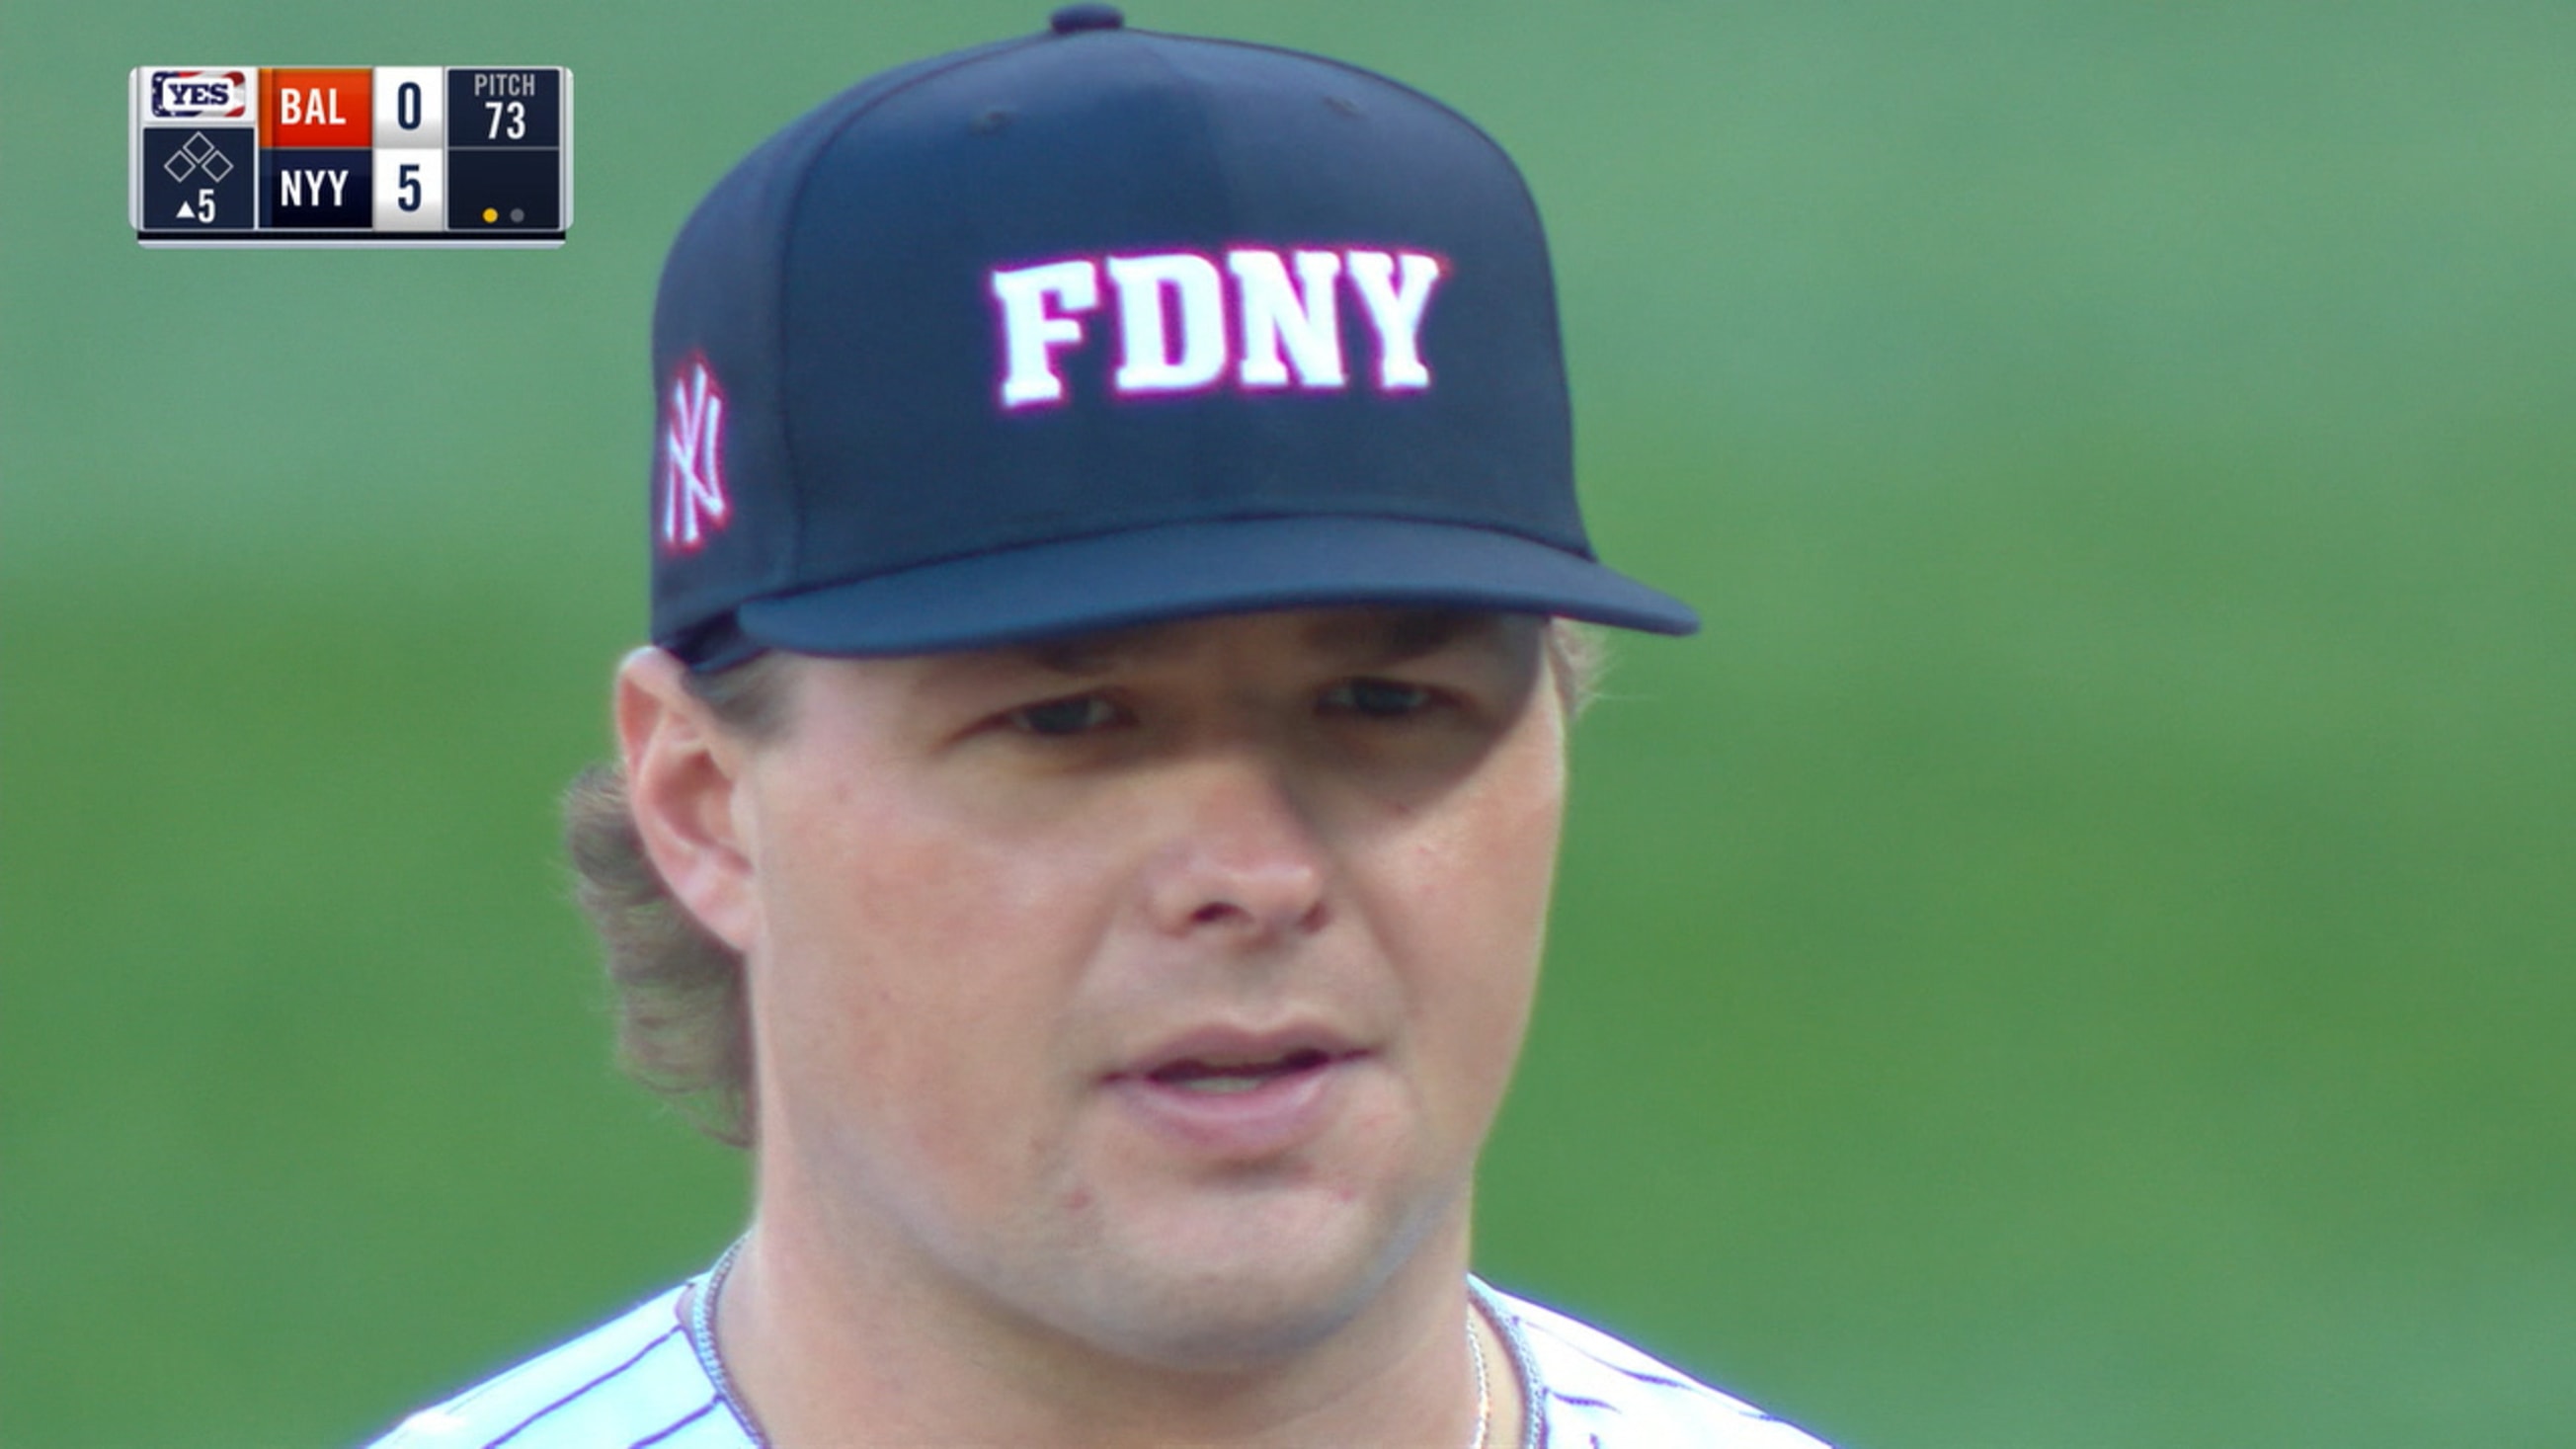 new york giants fdny hat